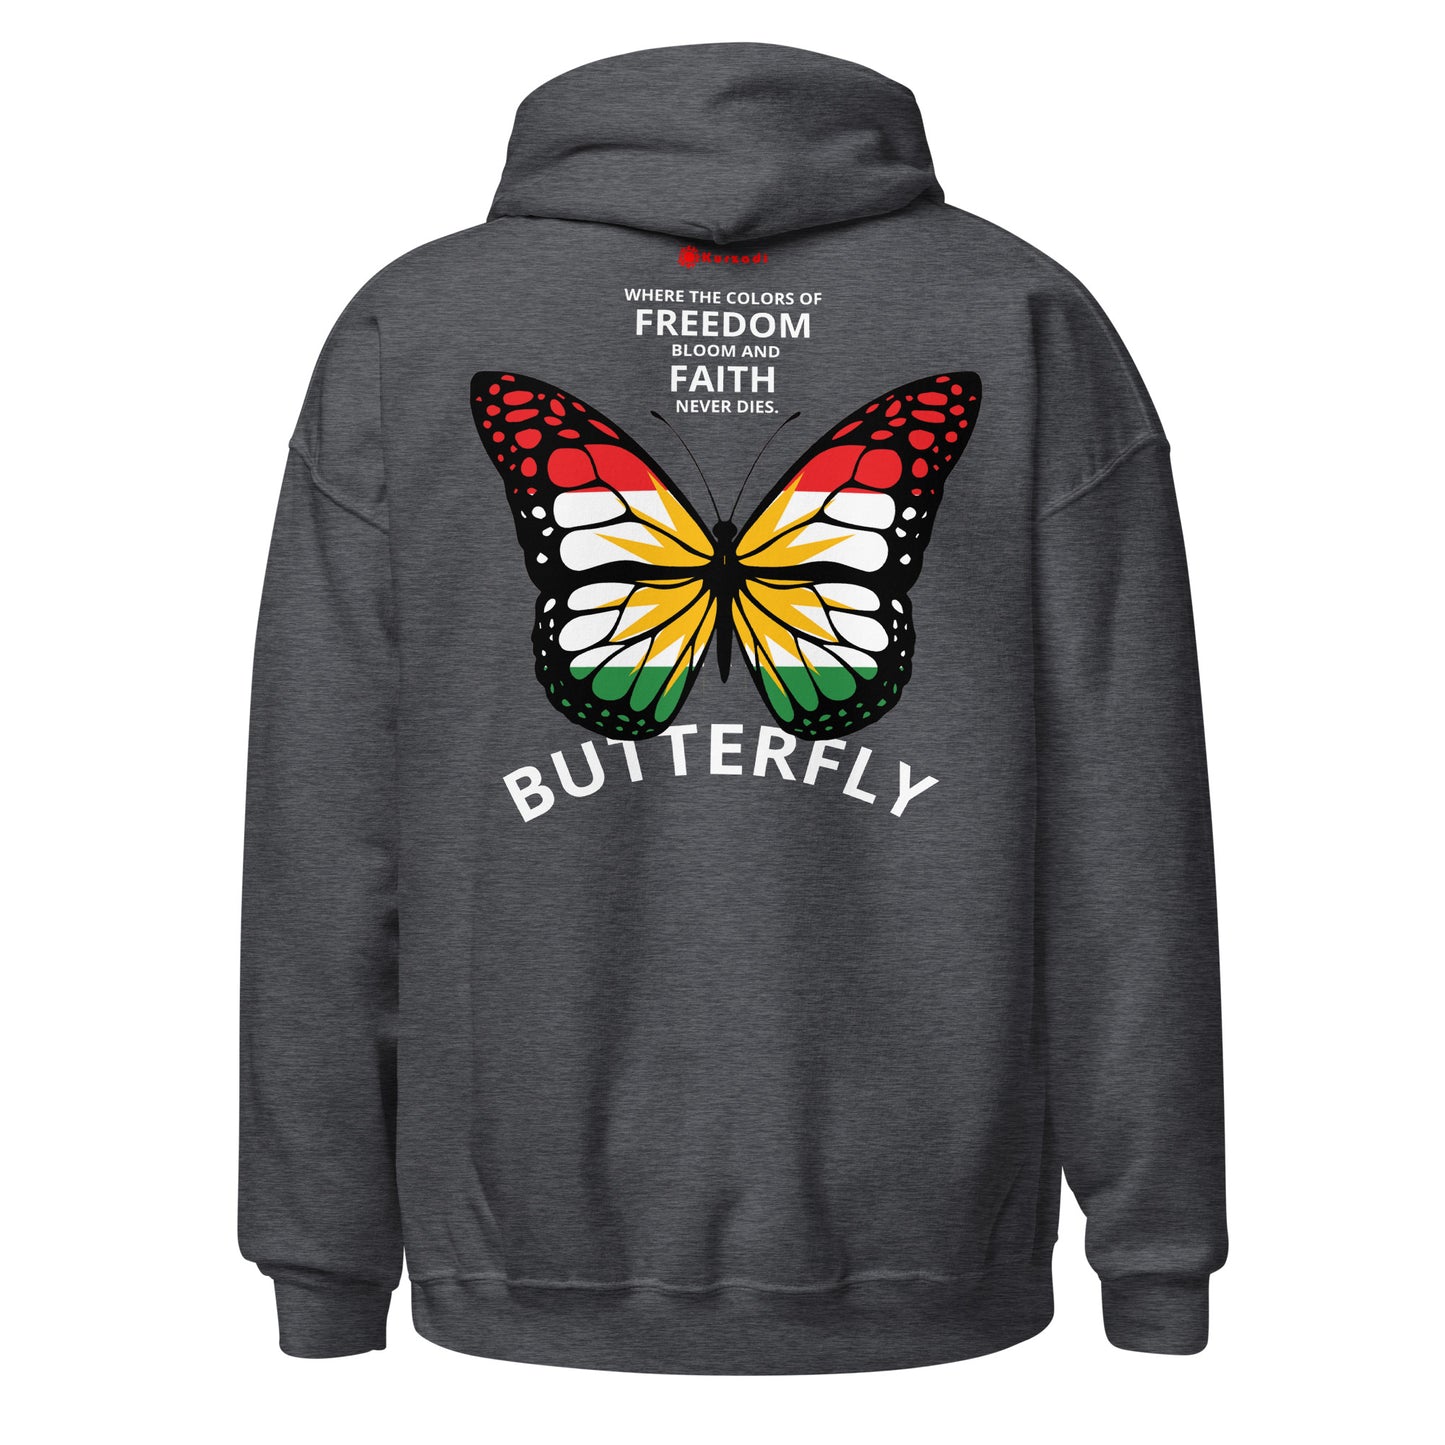 Freedom - Faith - Butterfly - Kapuzenpullover